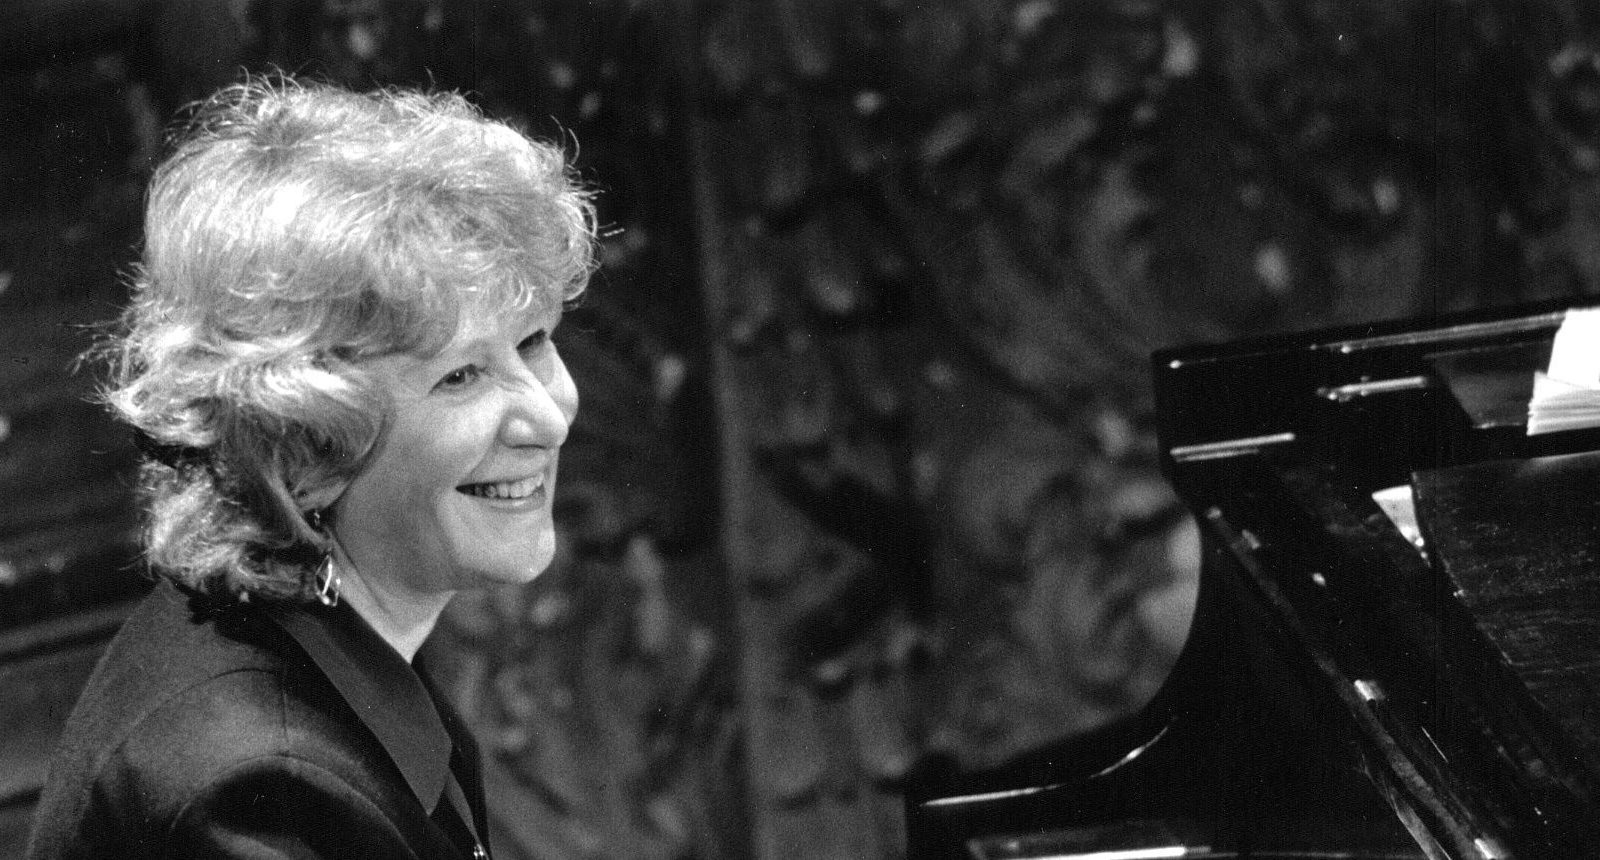 Ursula Oppens, piano